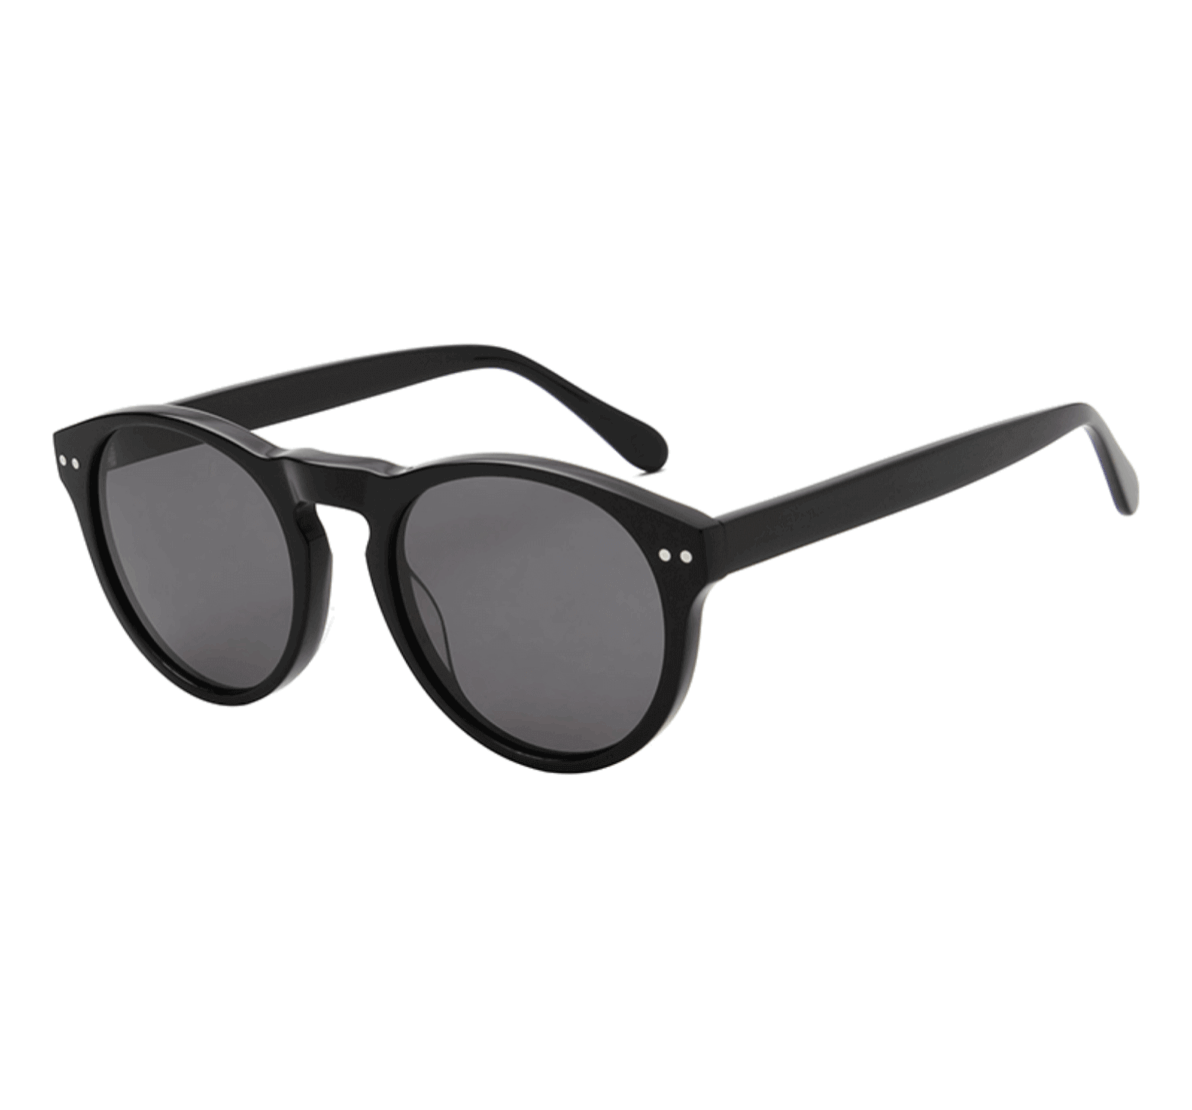 designer sunglasses wholesale, wholesale acetate sunglasses, wholesale designer sunglasses suppliers, high quality sunglasses wholesale, wholesale sunglasses manufacturer